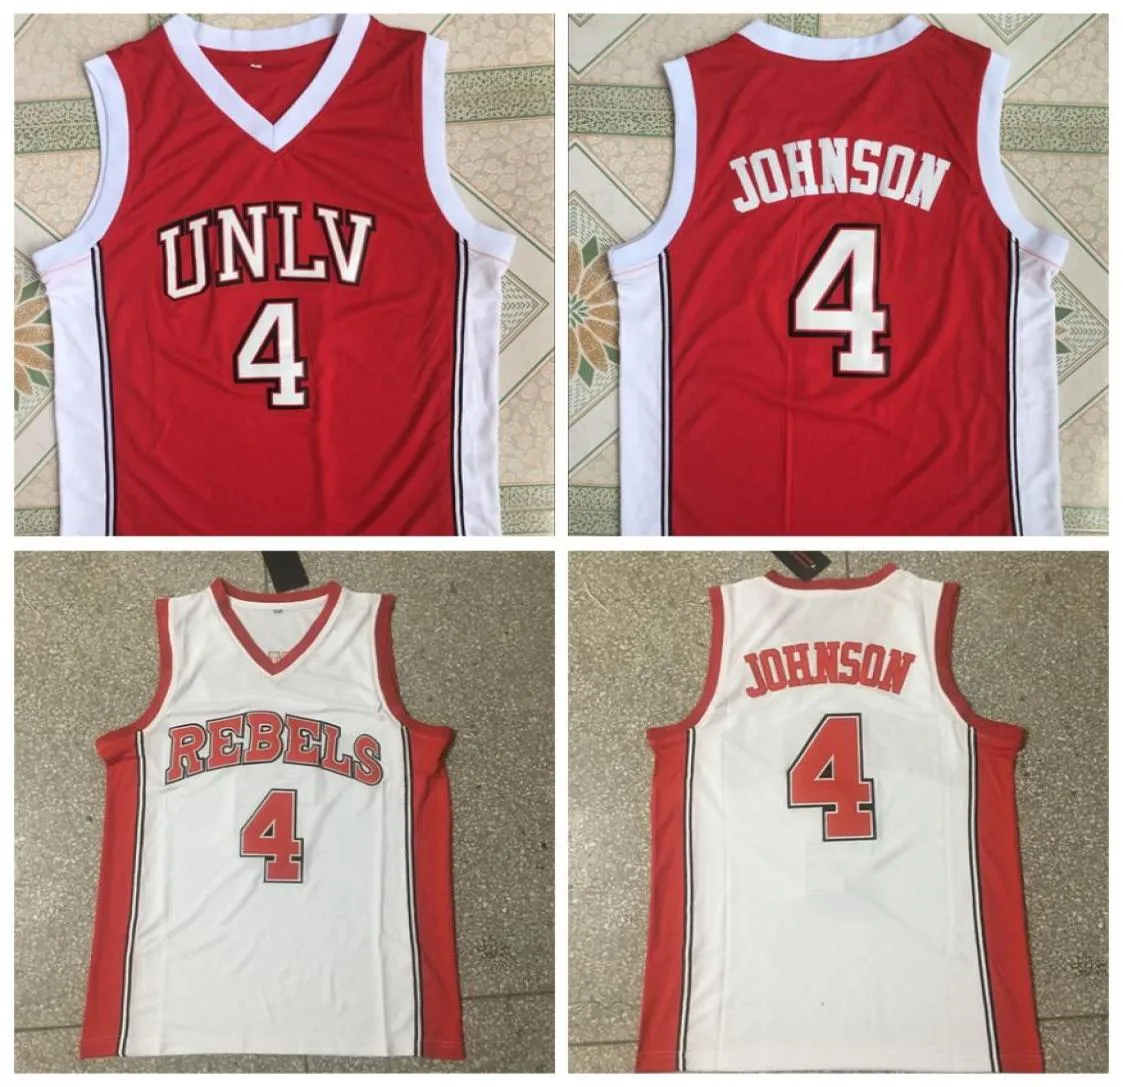 Vintage UNLV 4 Larry Johnson Nevada College Basketball Jerseys Mens Home Vermelho Branco Costurado Camisas SXXL7274834